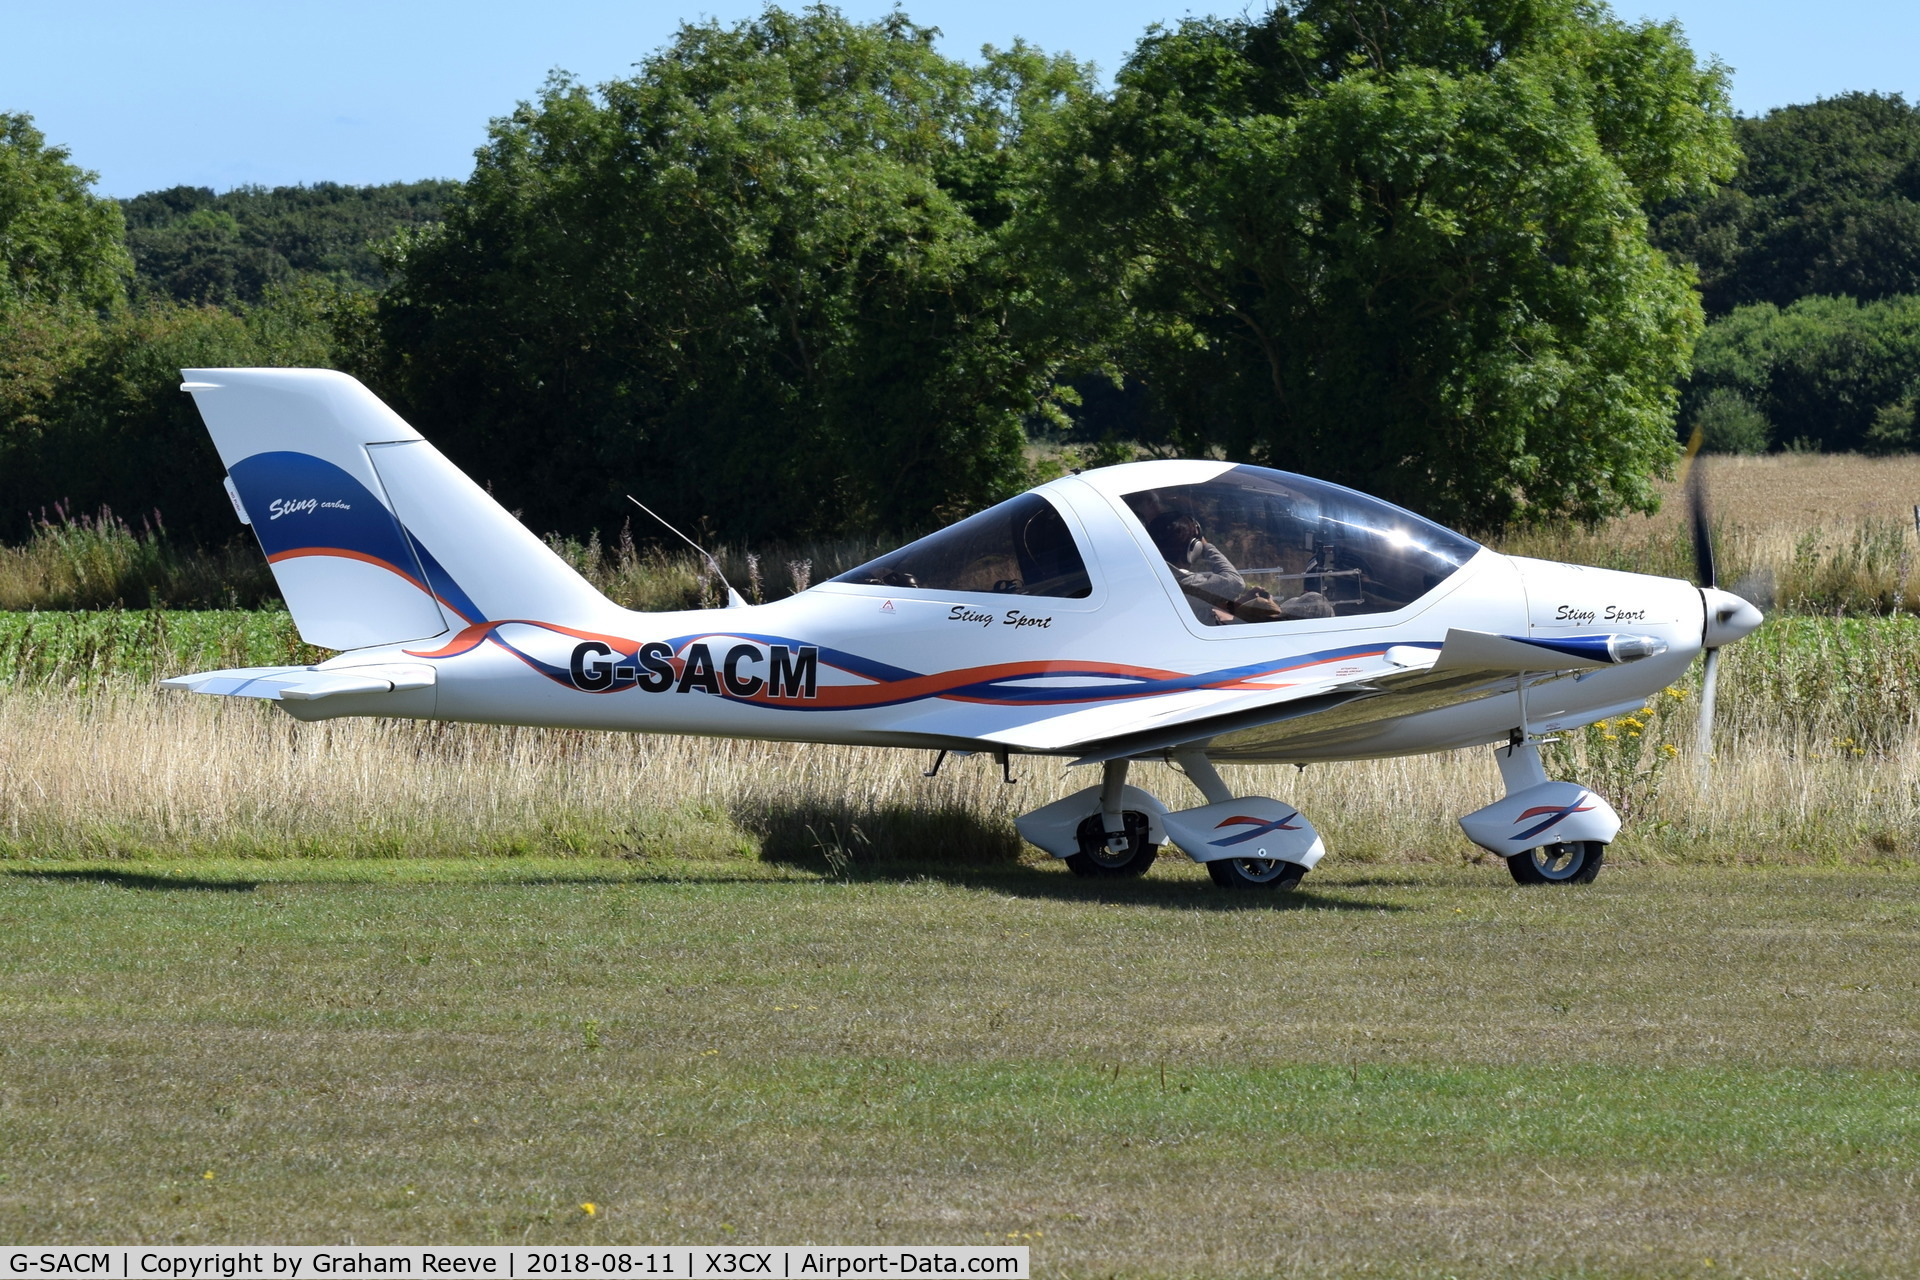 G-SACM, 2011 TL Ultralight TL-2000UK Sting Carbon C/N LAA 347-14798, Just landed at Northrepps.